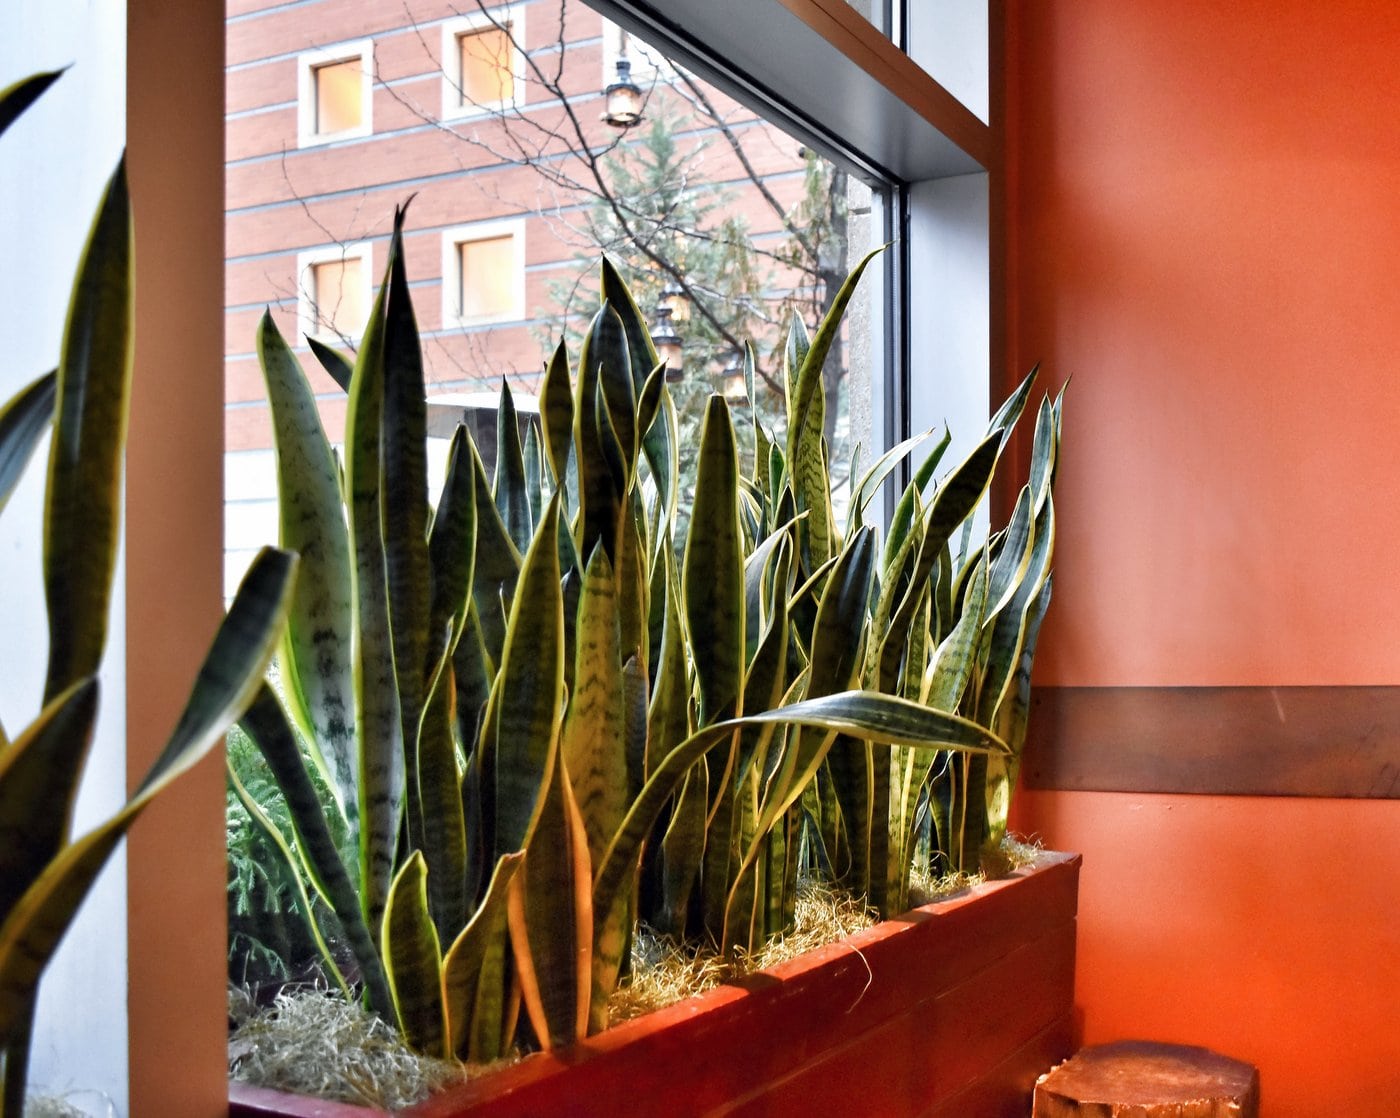 Indoor plants decorating: Snake plant growing window barrier